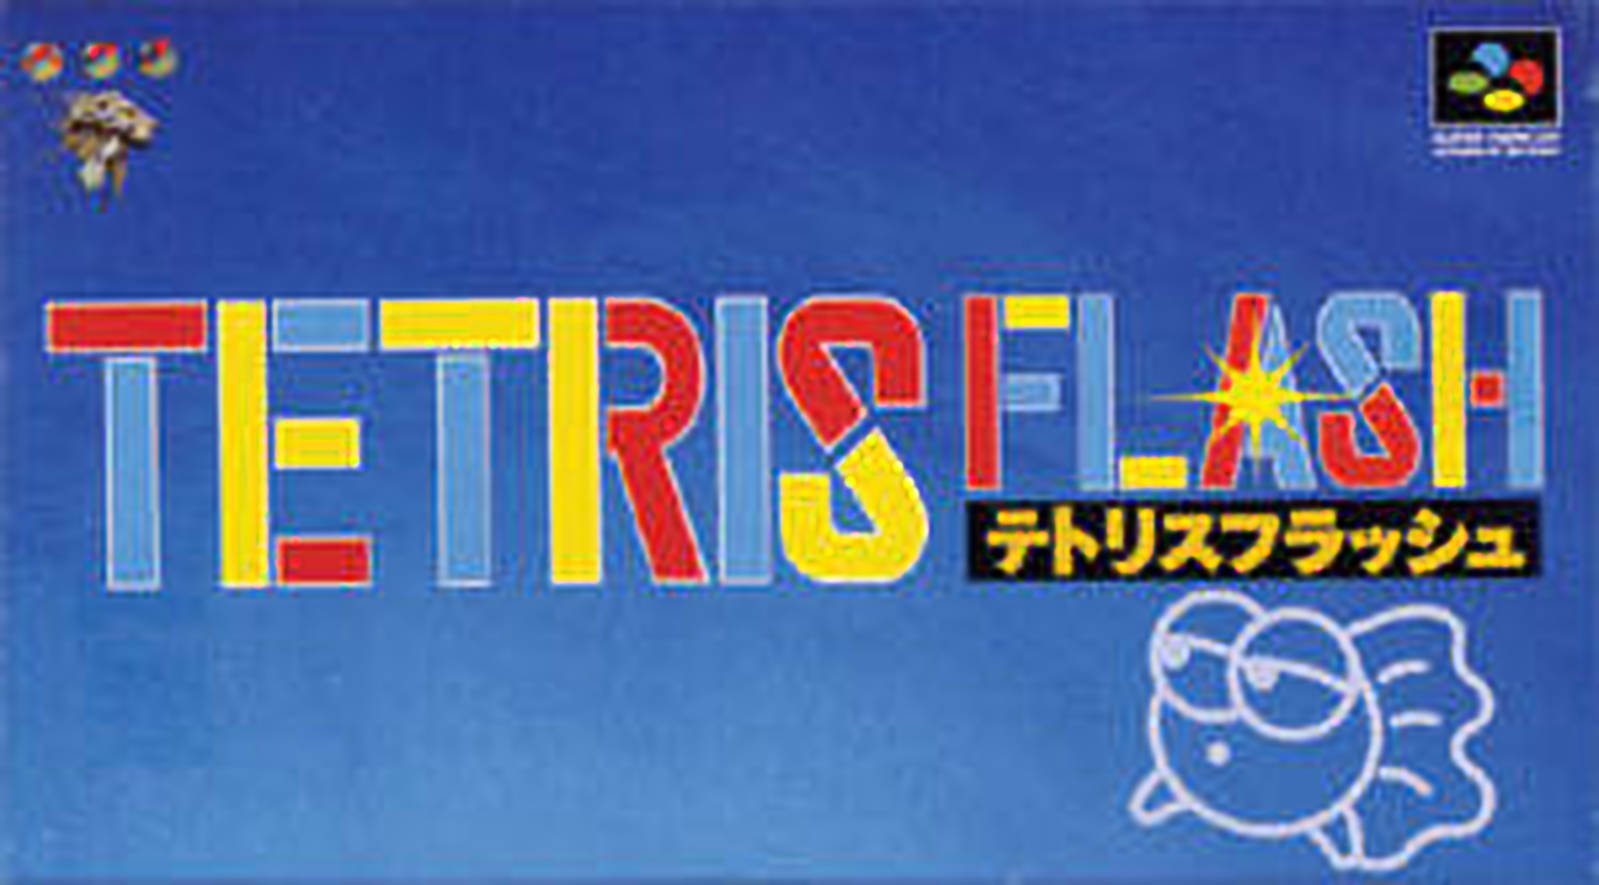 The coverart image of Tetris Flash 